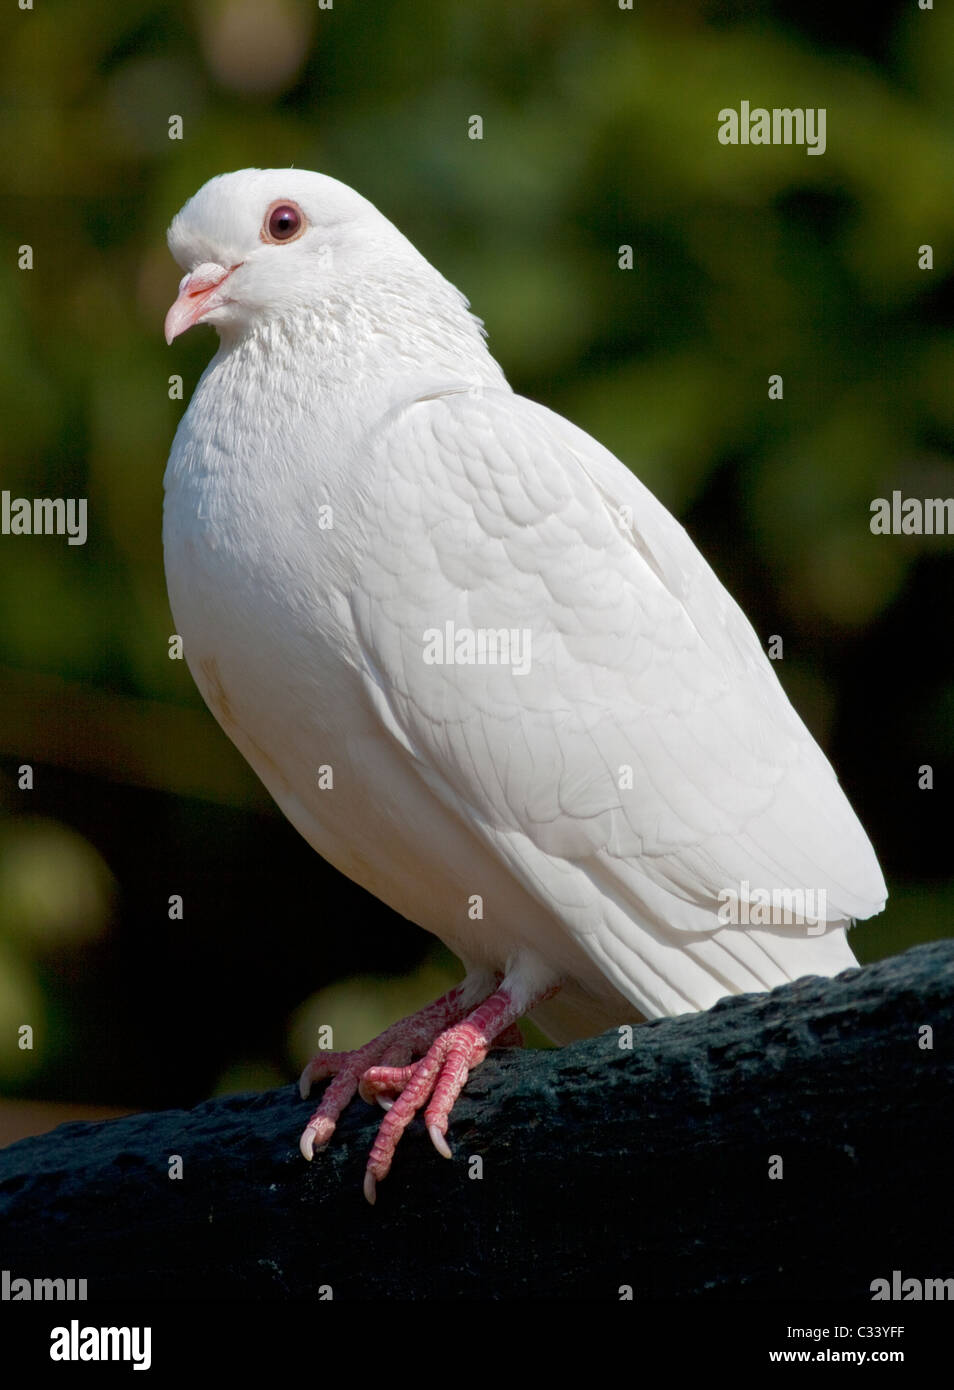 Colomba bianca (Columba Foto stock - Alamy